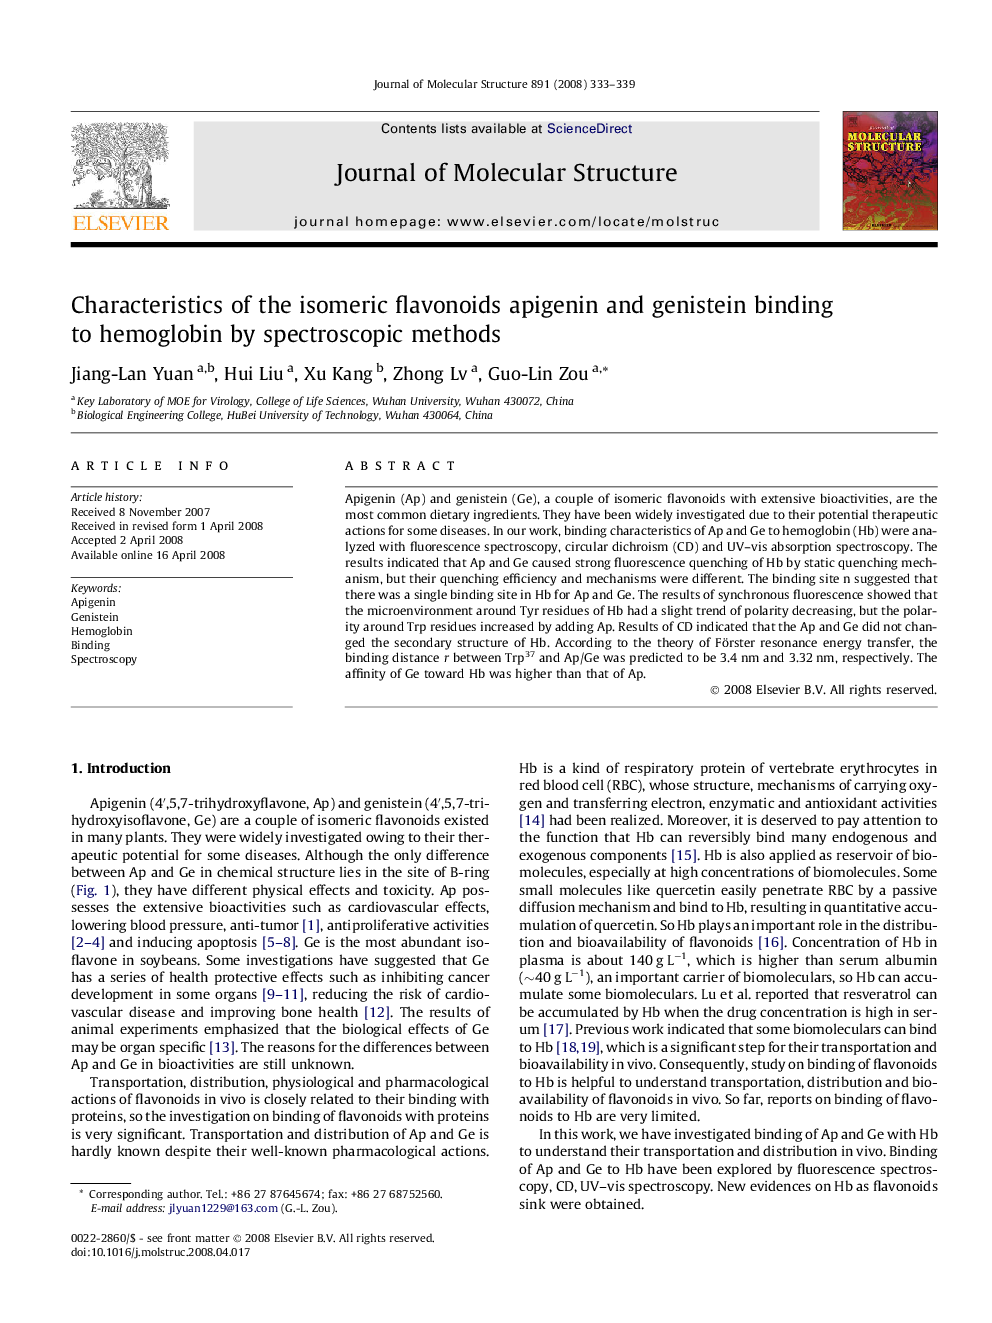 Characteristics of the isomeric flavonoids apigenin and genistein binding to hemoglobin by spectroscopic methods